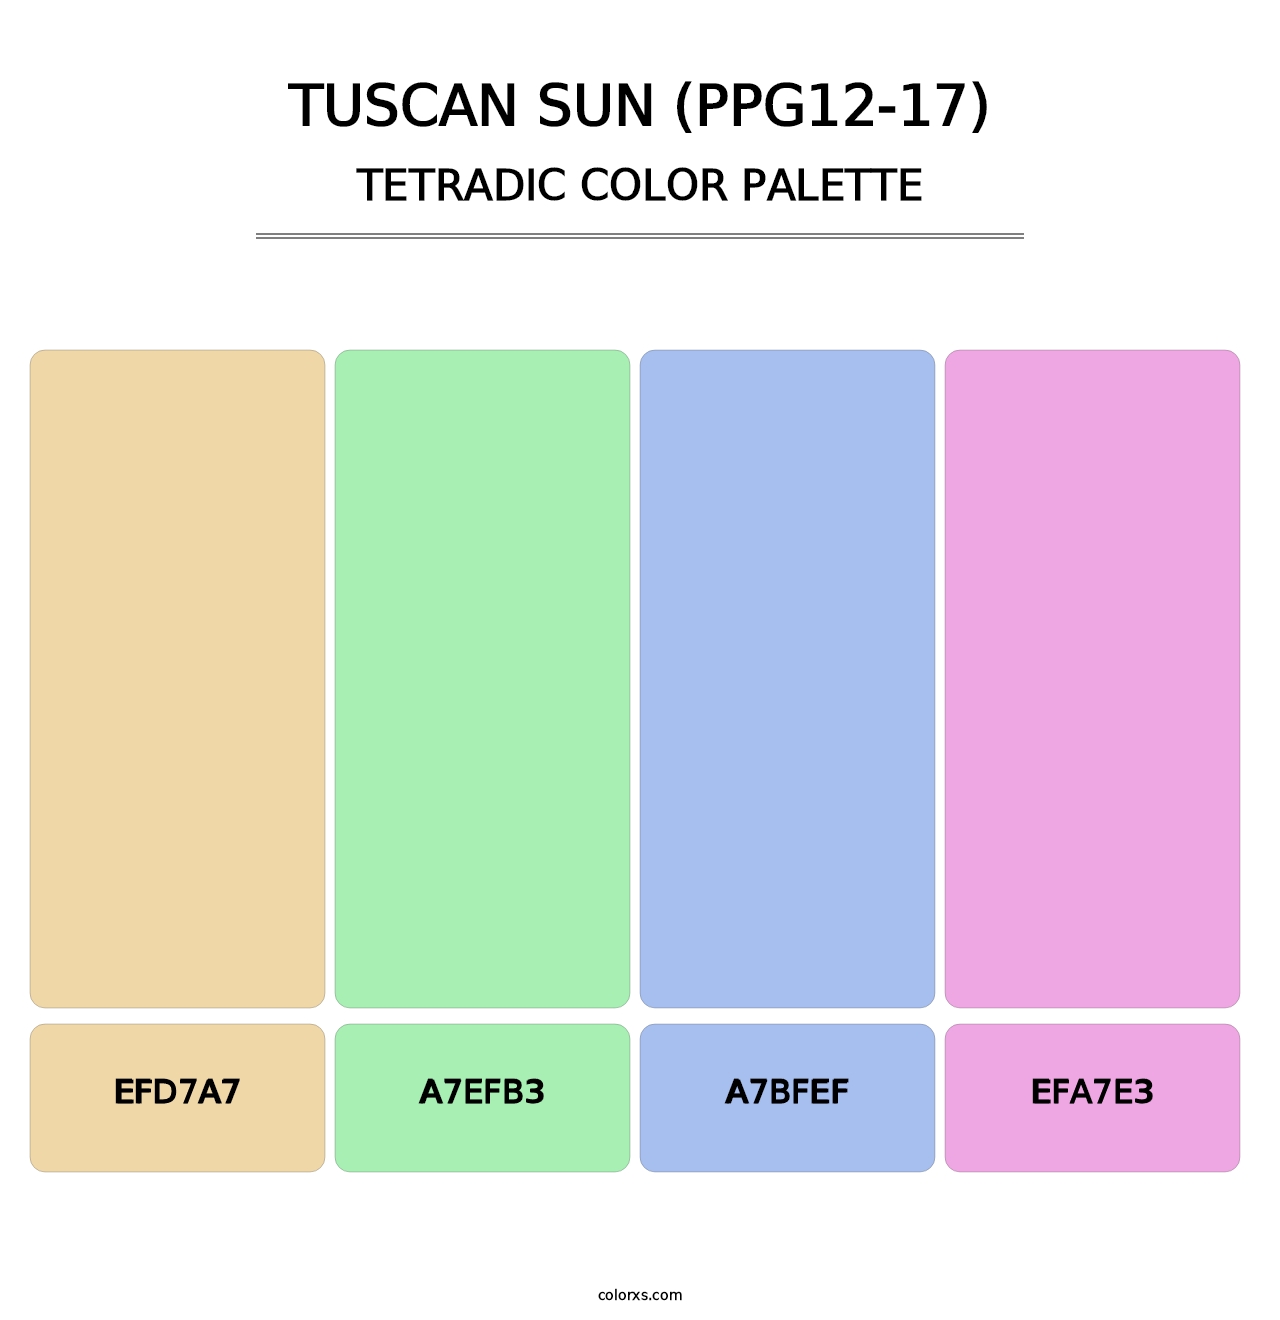 Tuscan Sun (PPG12-17) - Tetradic Color Palette